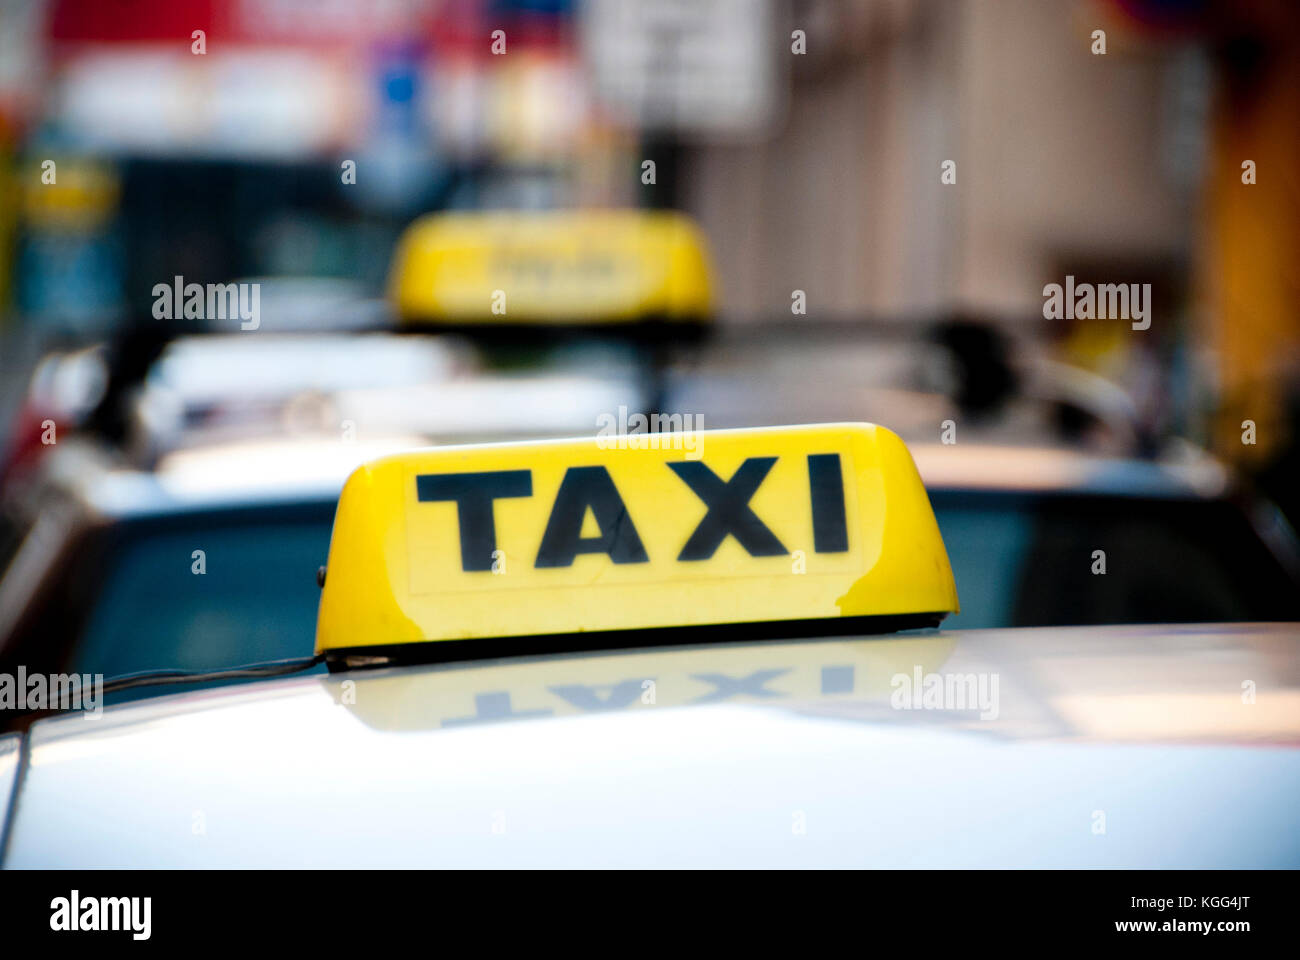 taxi cab sign Stock Photo